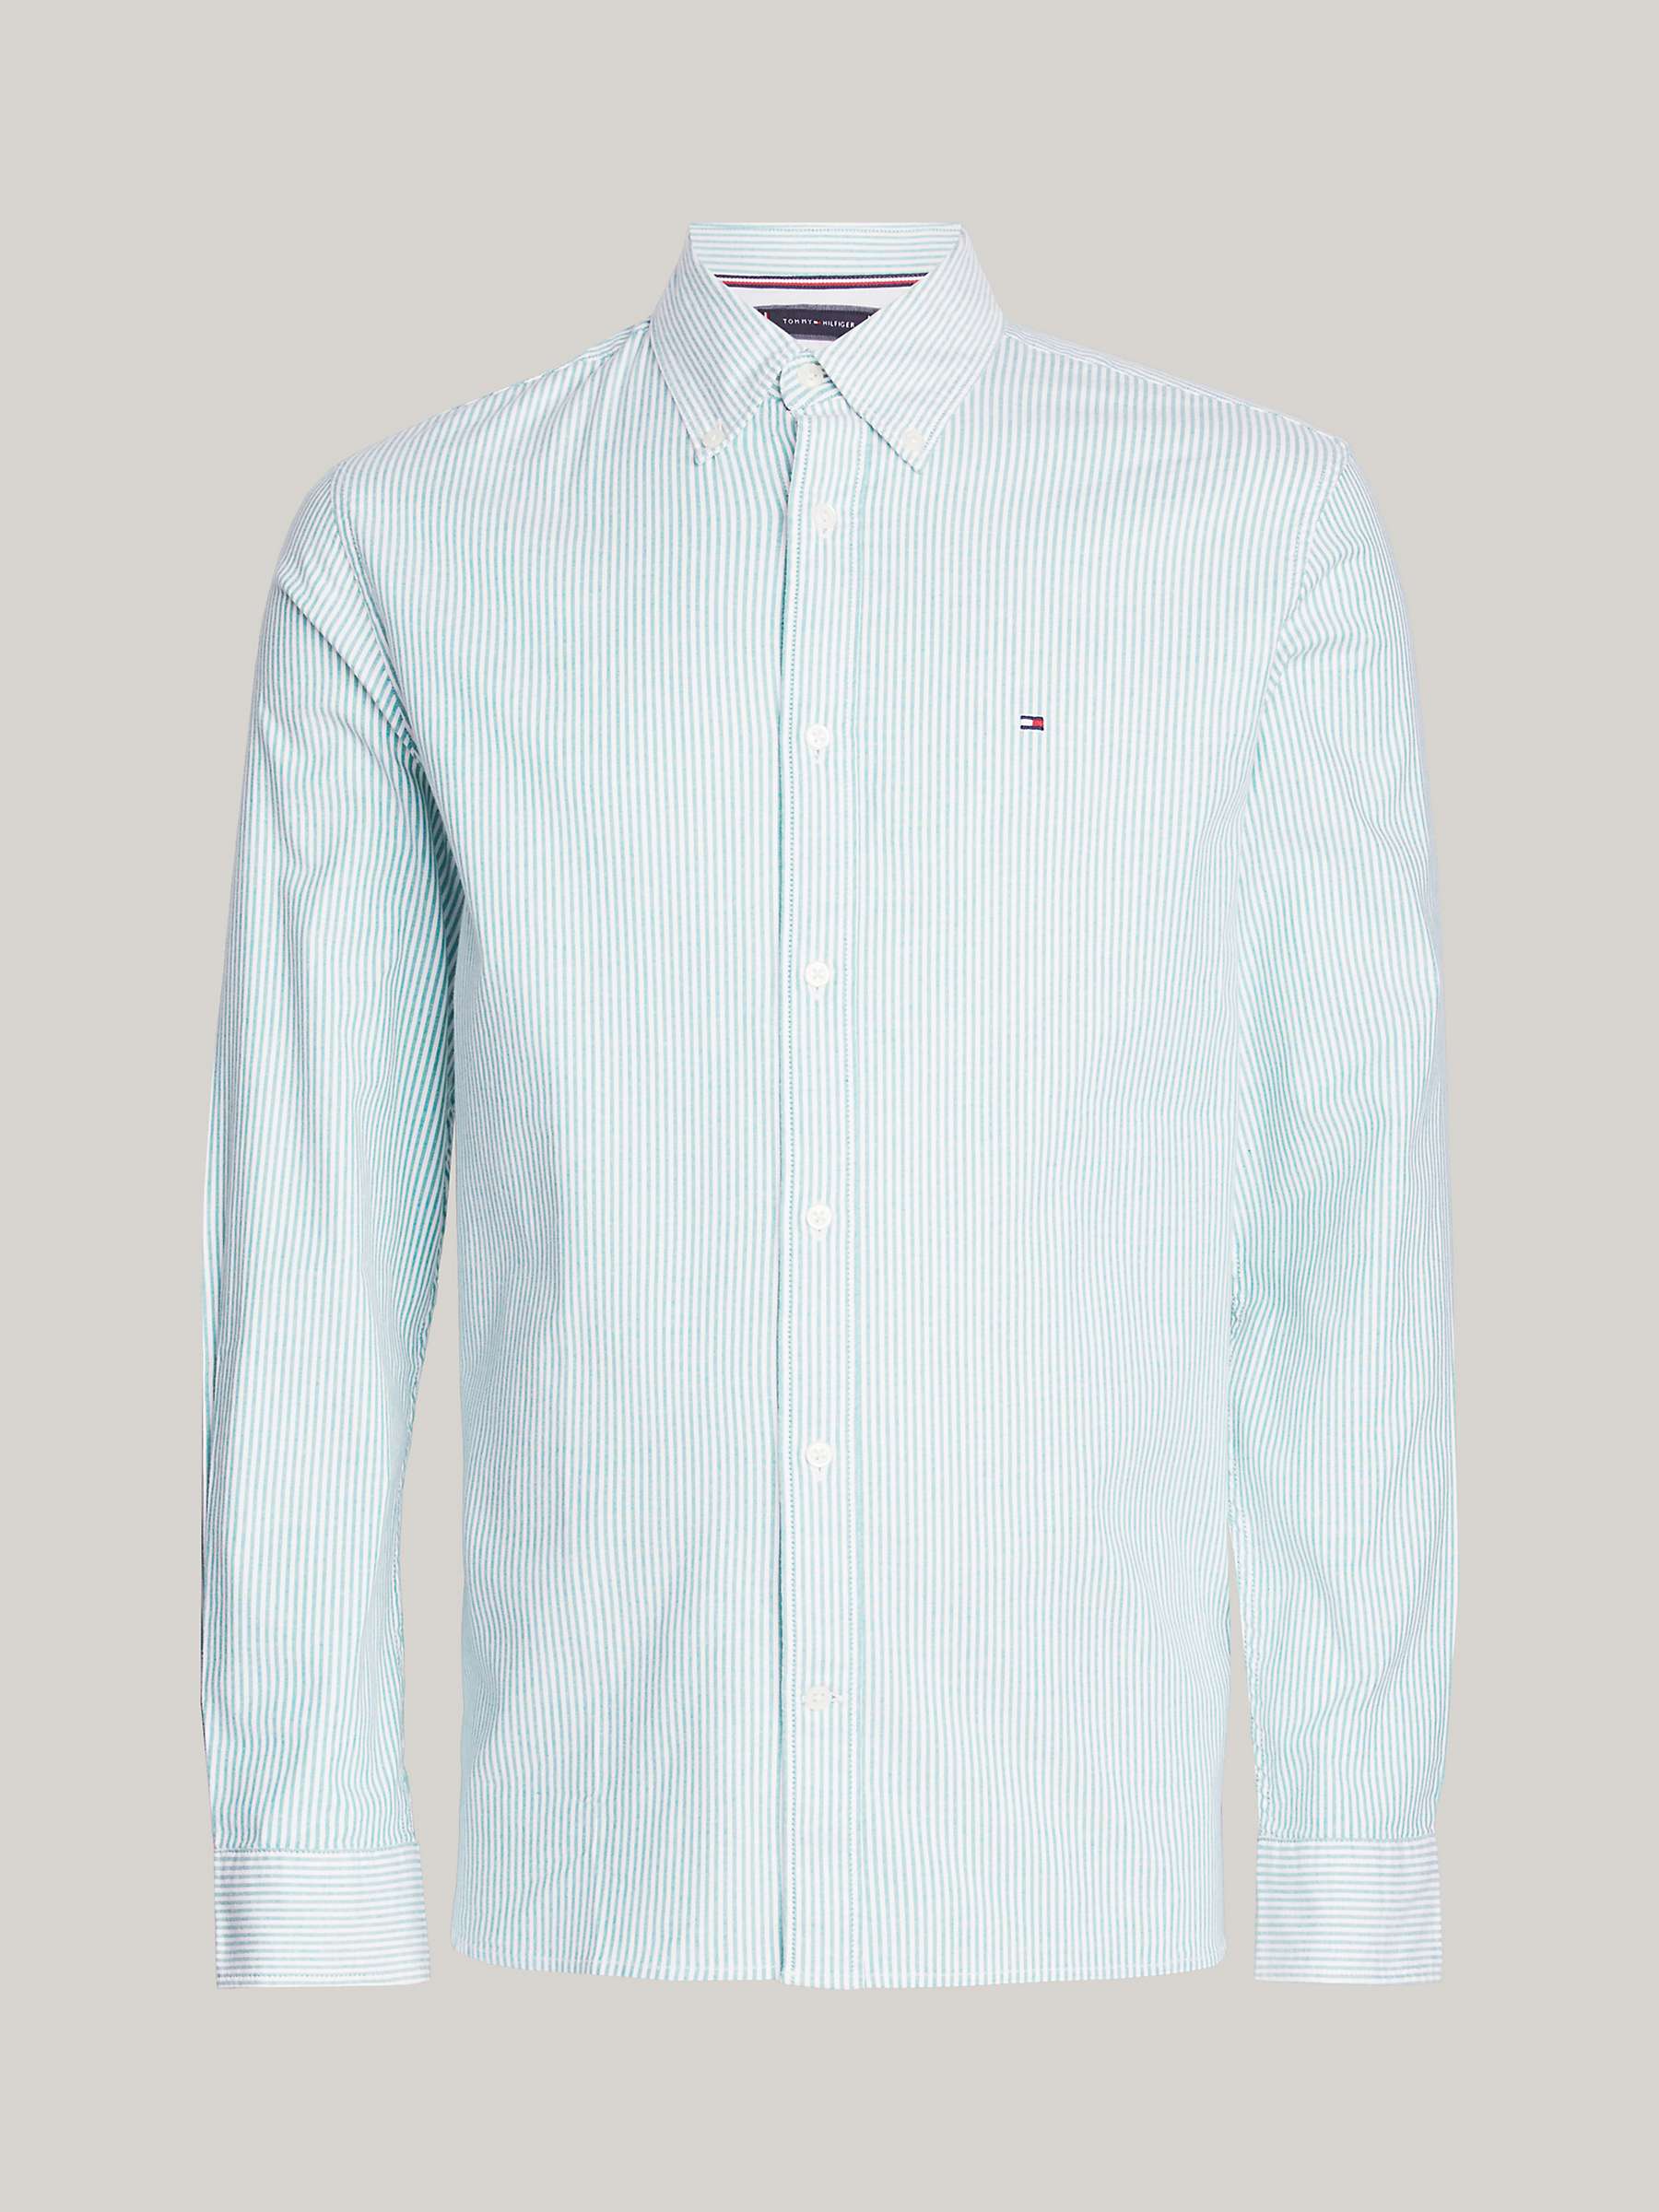 Buy Tommy Hilfiger 1985 Flex Oxford Stripe Long Sleeve Shirt, Green/White Online at johnlewis.com